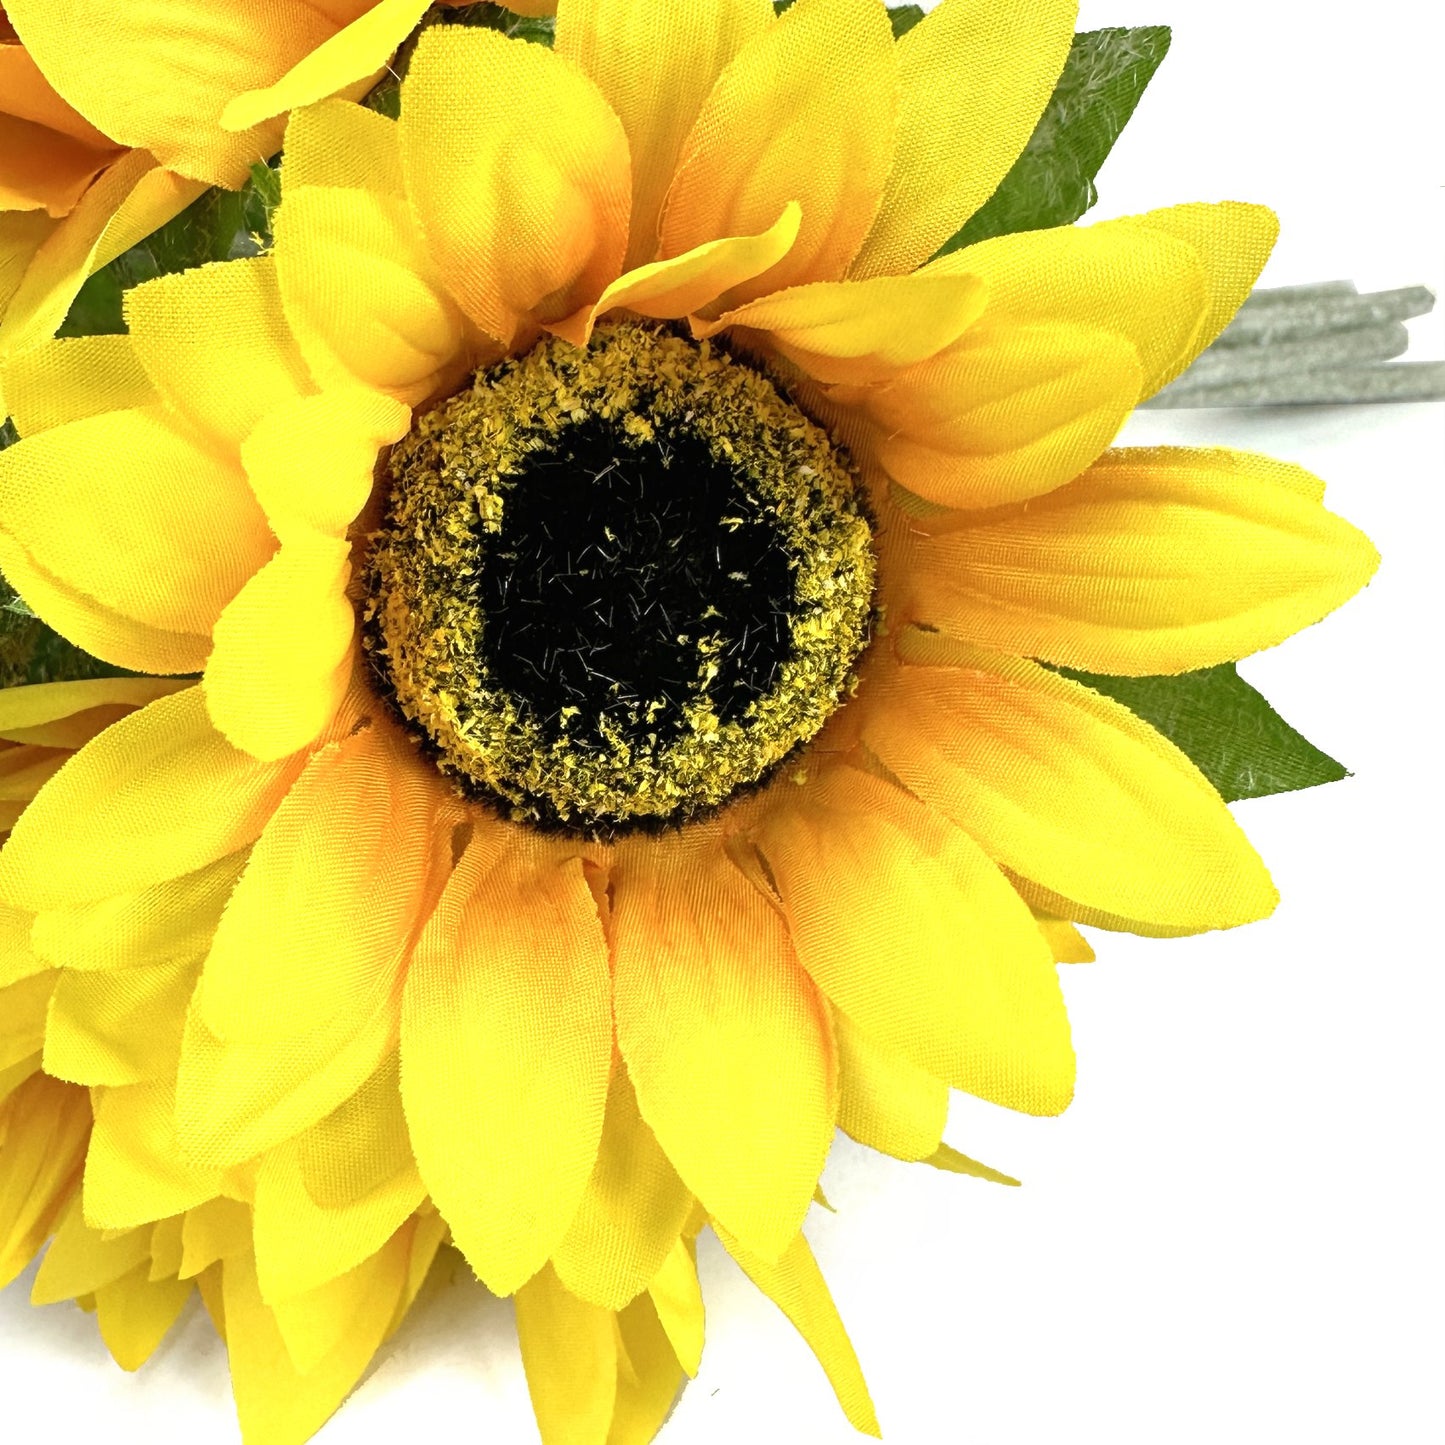 Artificial Sunflower Bundle 7 Yellow Flowers 40cm